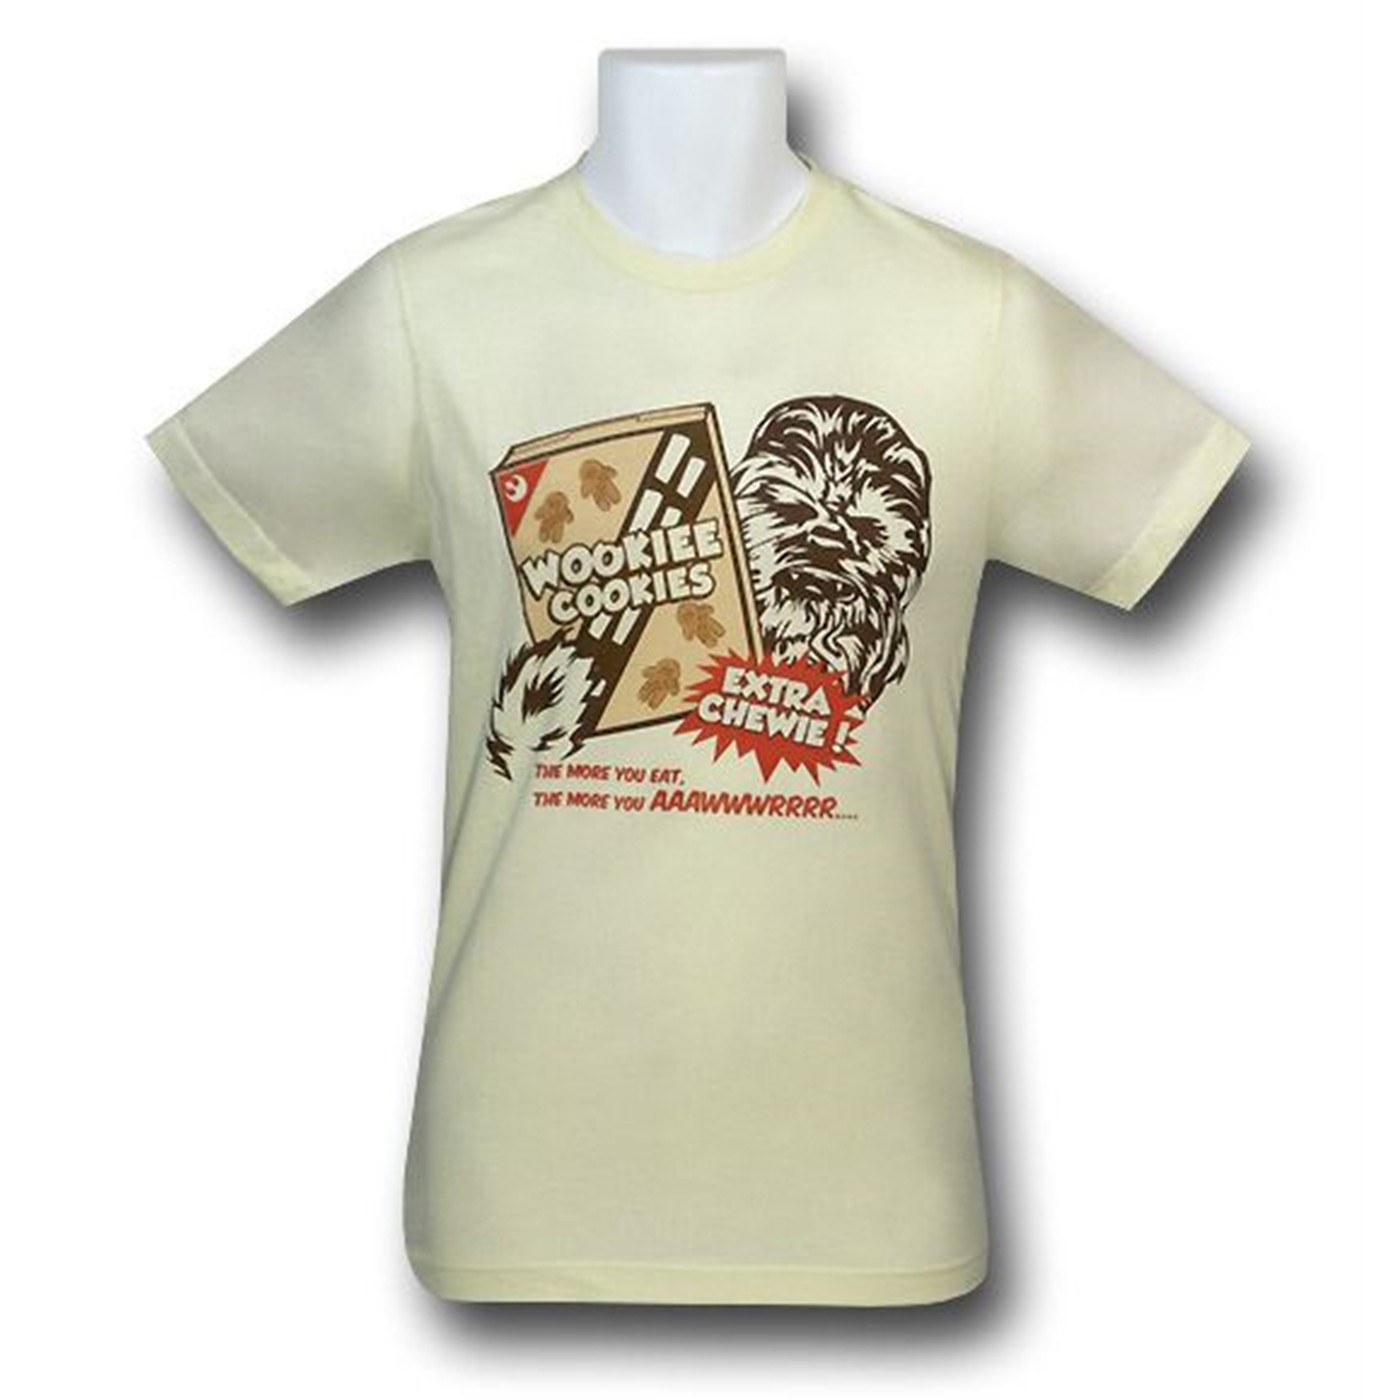 Chewbacca Wookie Cookies 30 Single T-Shirt